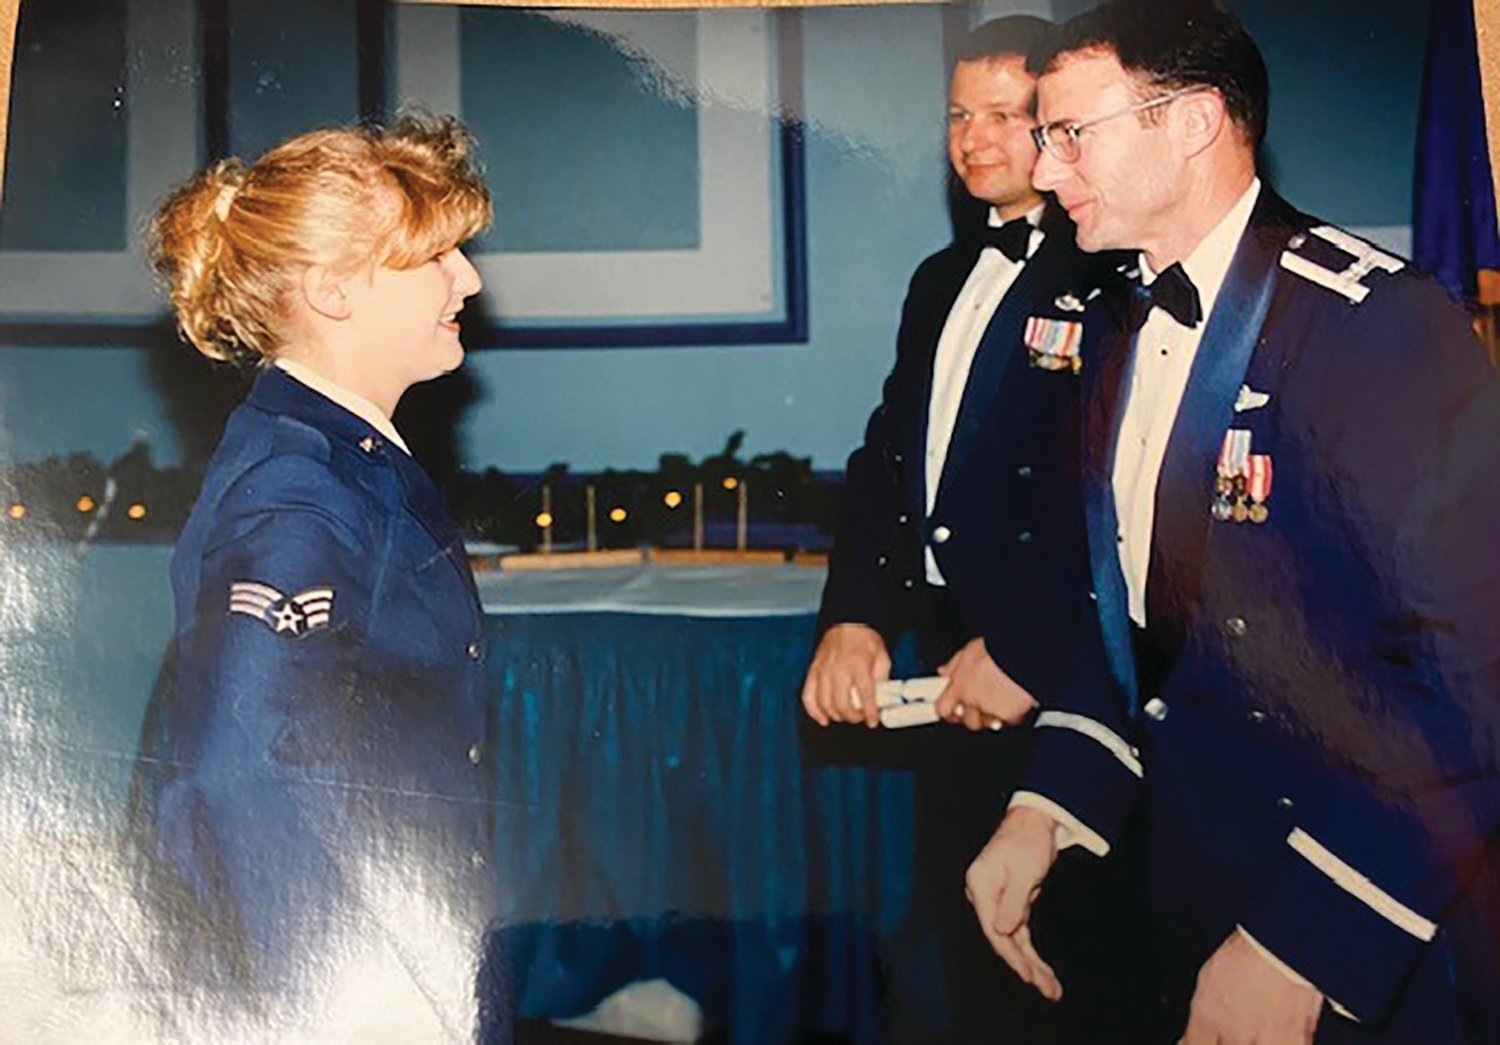 Catrina Hammond-Meijer graduated from Airman Leadership School in 1998 at Nellis AFB in Las Vegas.